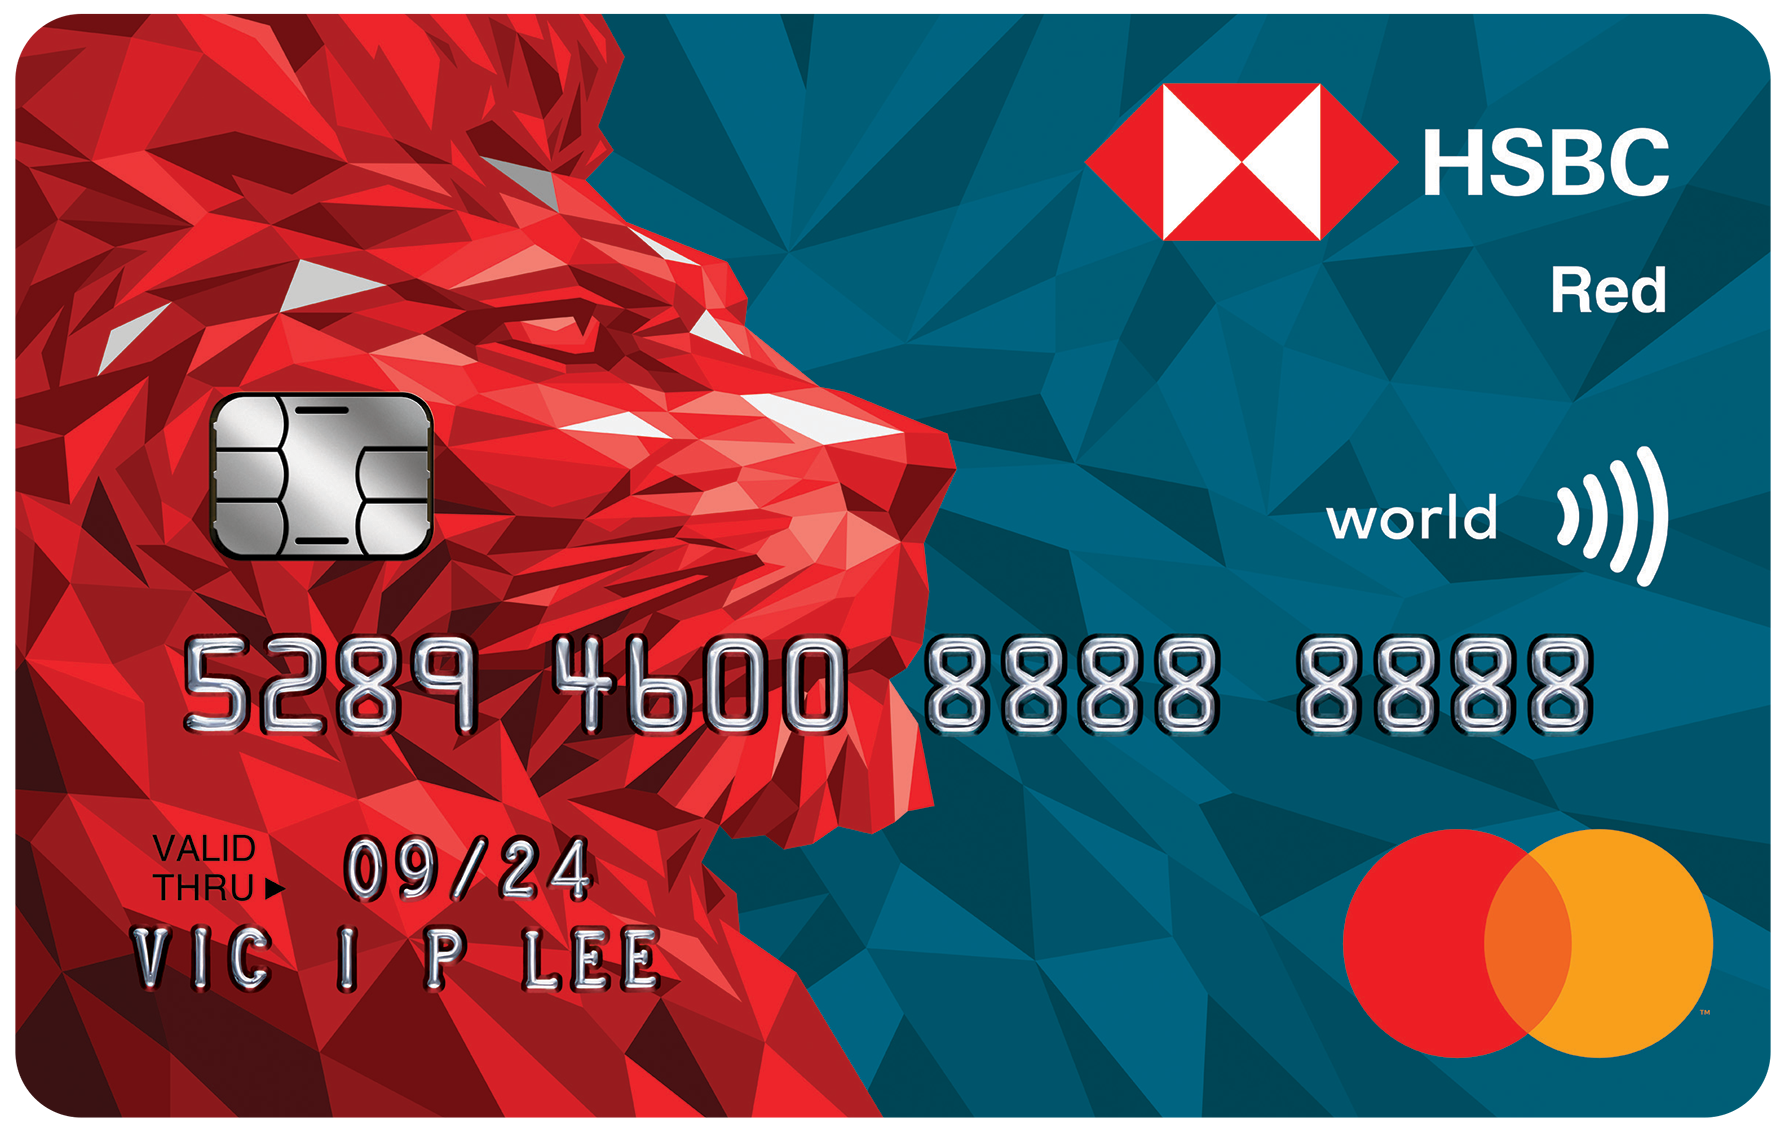 HSBC Red Card Info & Offer Details 2020 MoneyHero